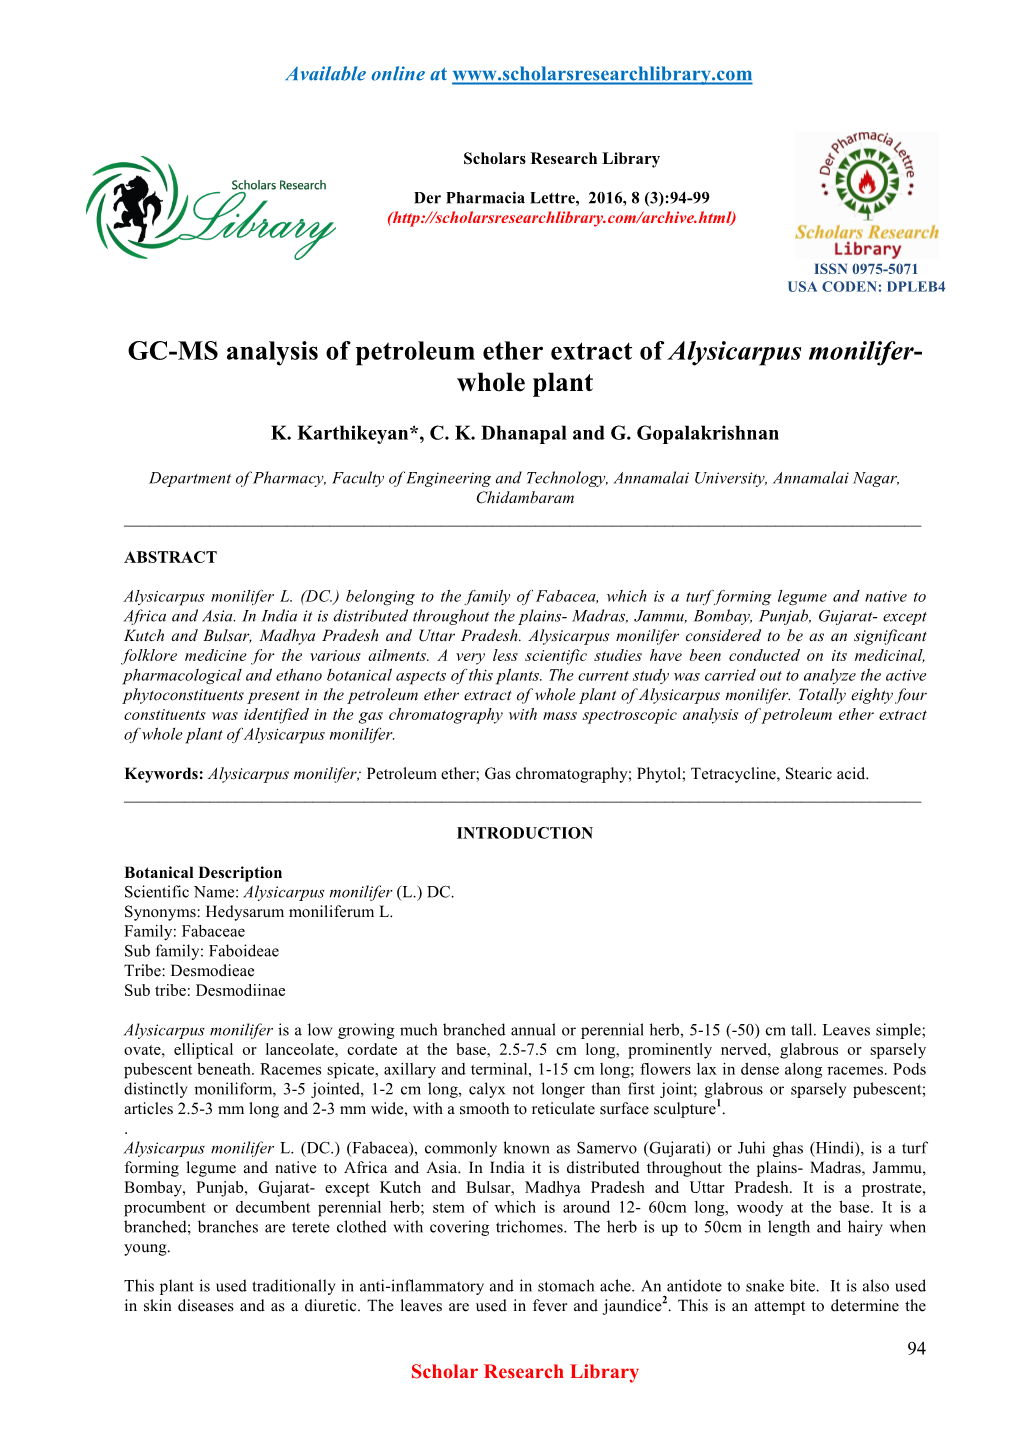 GC-MS Analysis of Petroleum Ether Extract of Alysicarpus Monilifer - Whole Plant